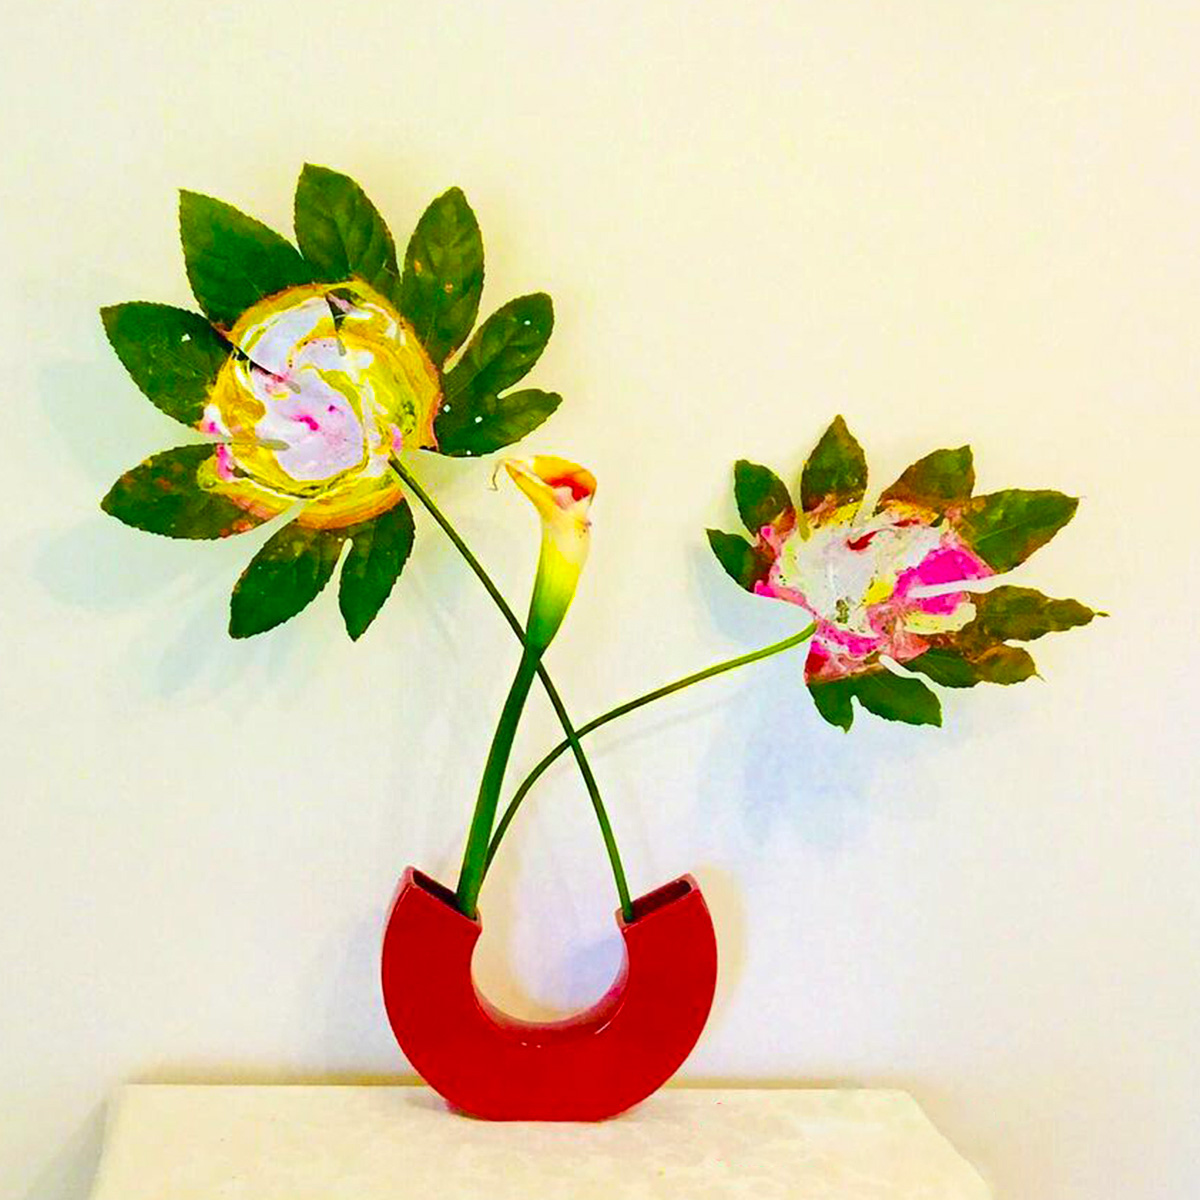 Toula Karanikolopoulos Shows How Ikebana Is the Art of Flower Arrangement 08